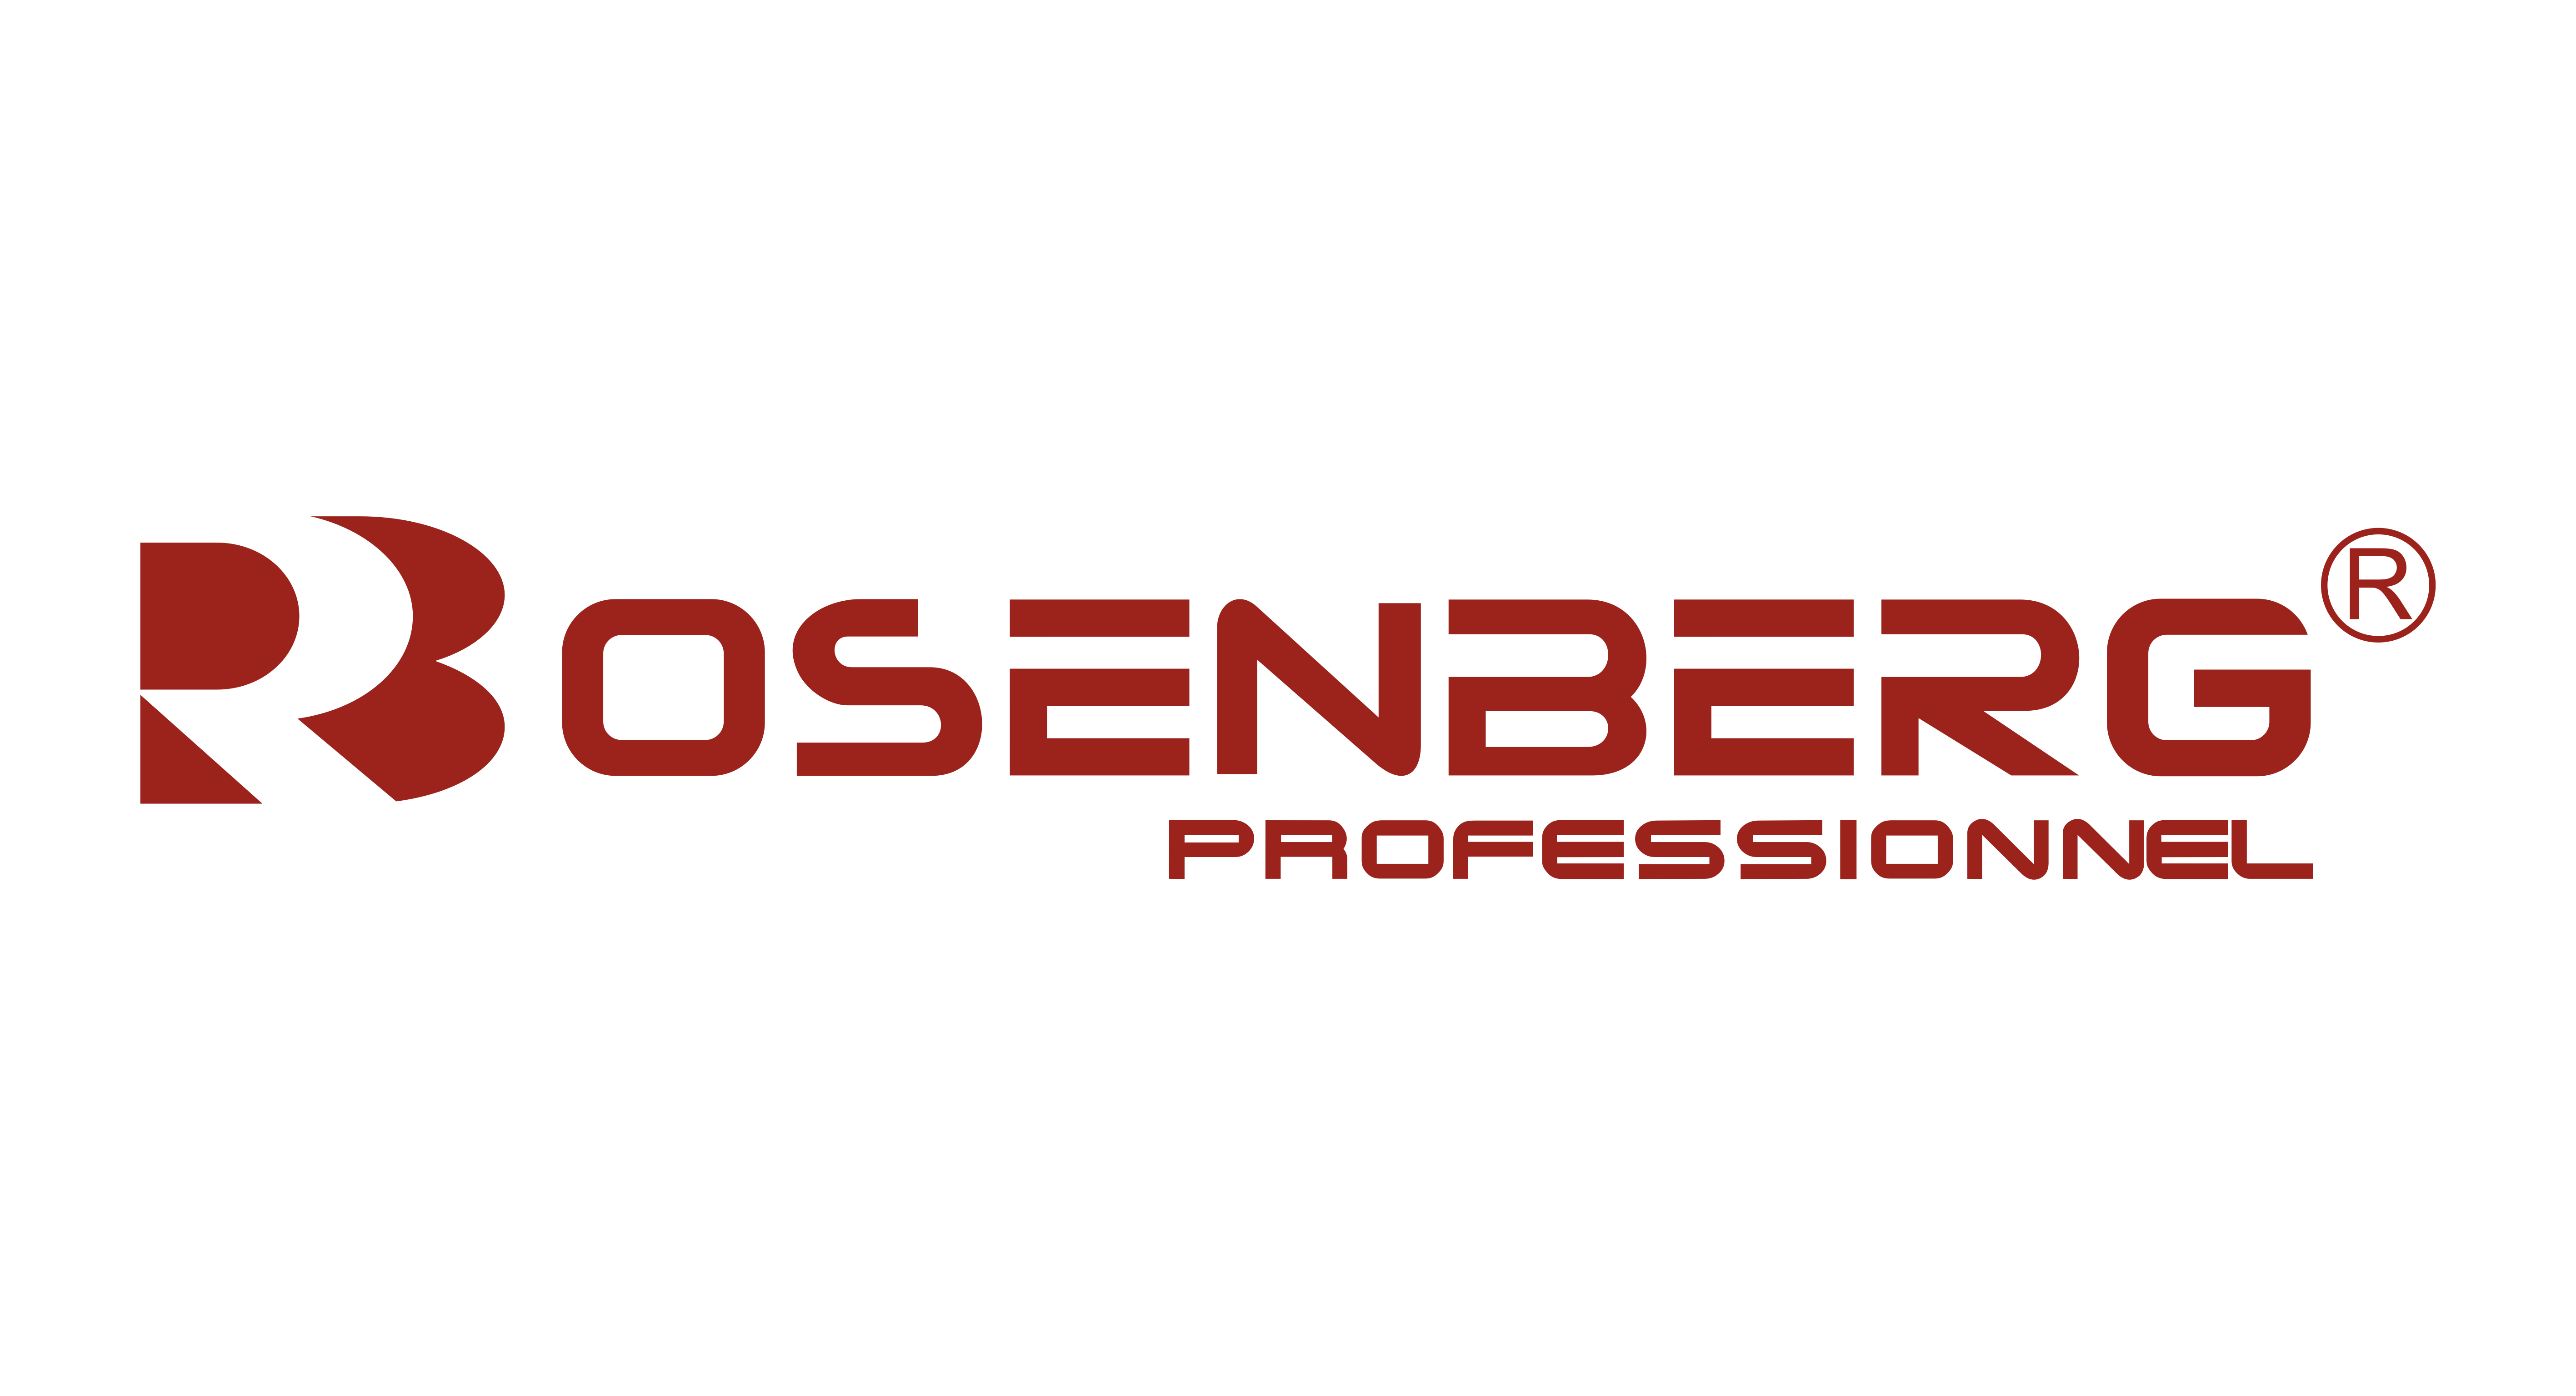 Bosenberg